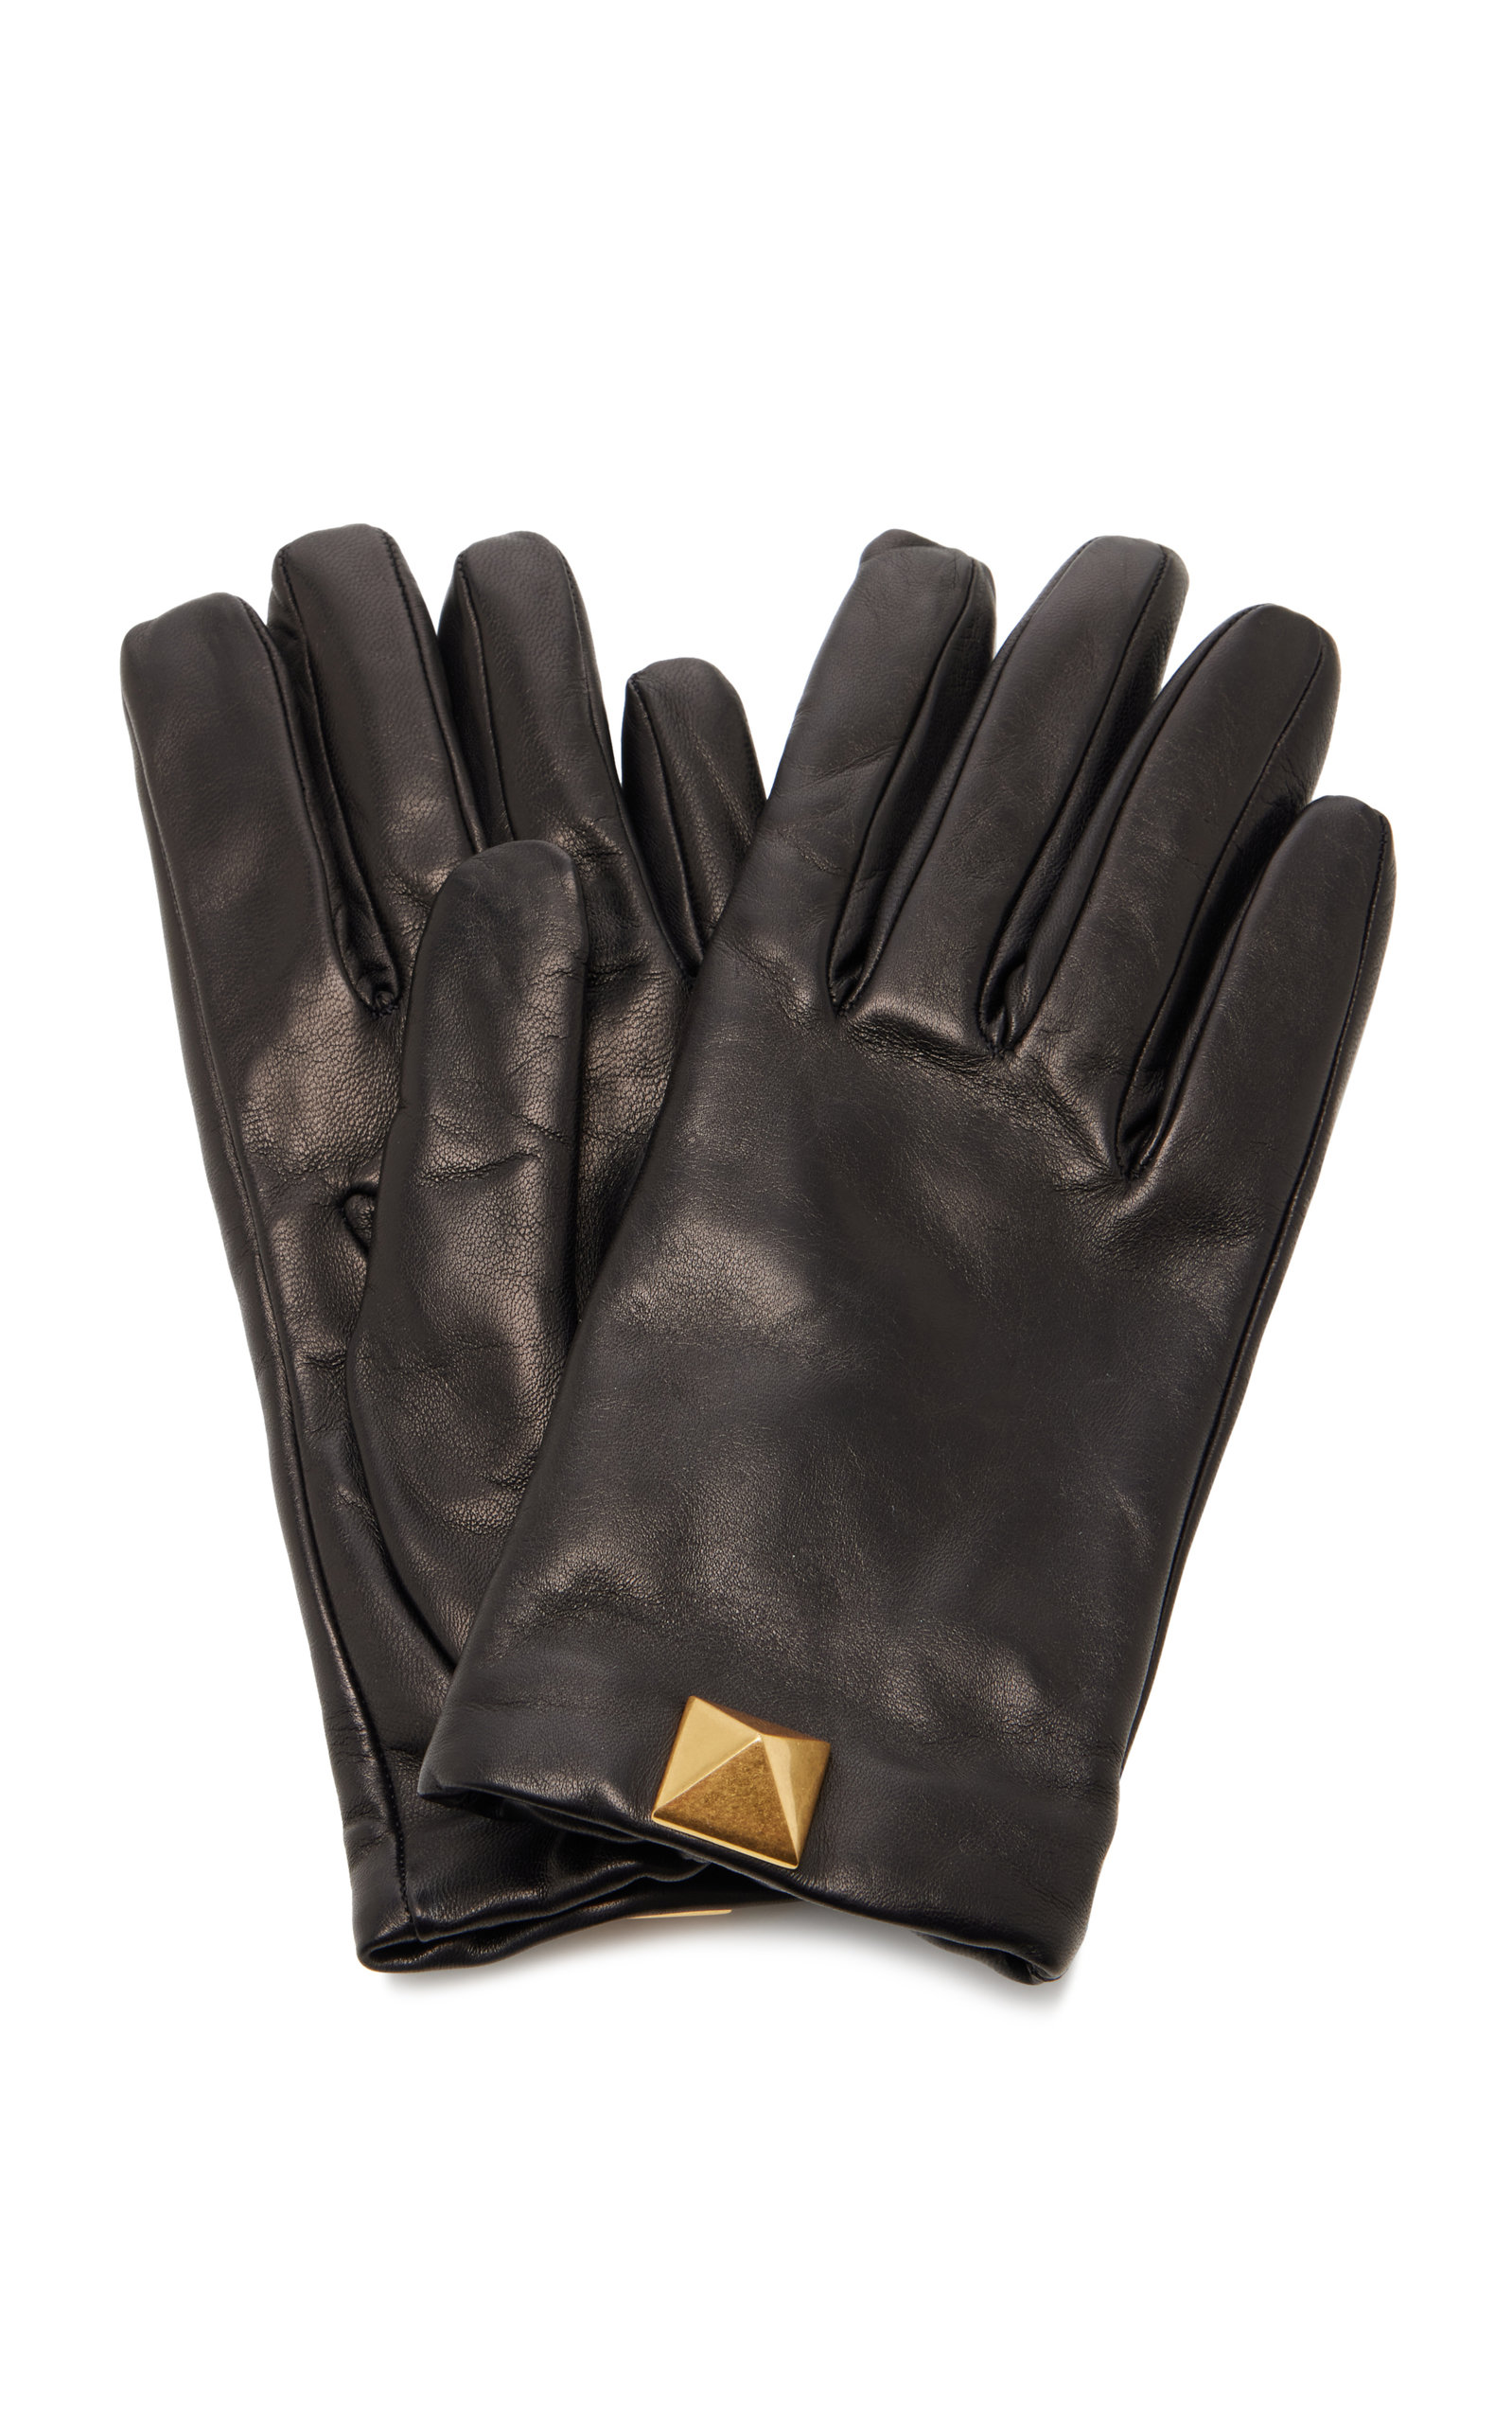 Valentino - Women's Valentino Garavani Roman Stud Leather Gloves - Black - 6 - Moda Operandi